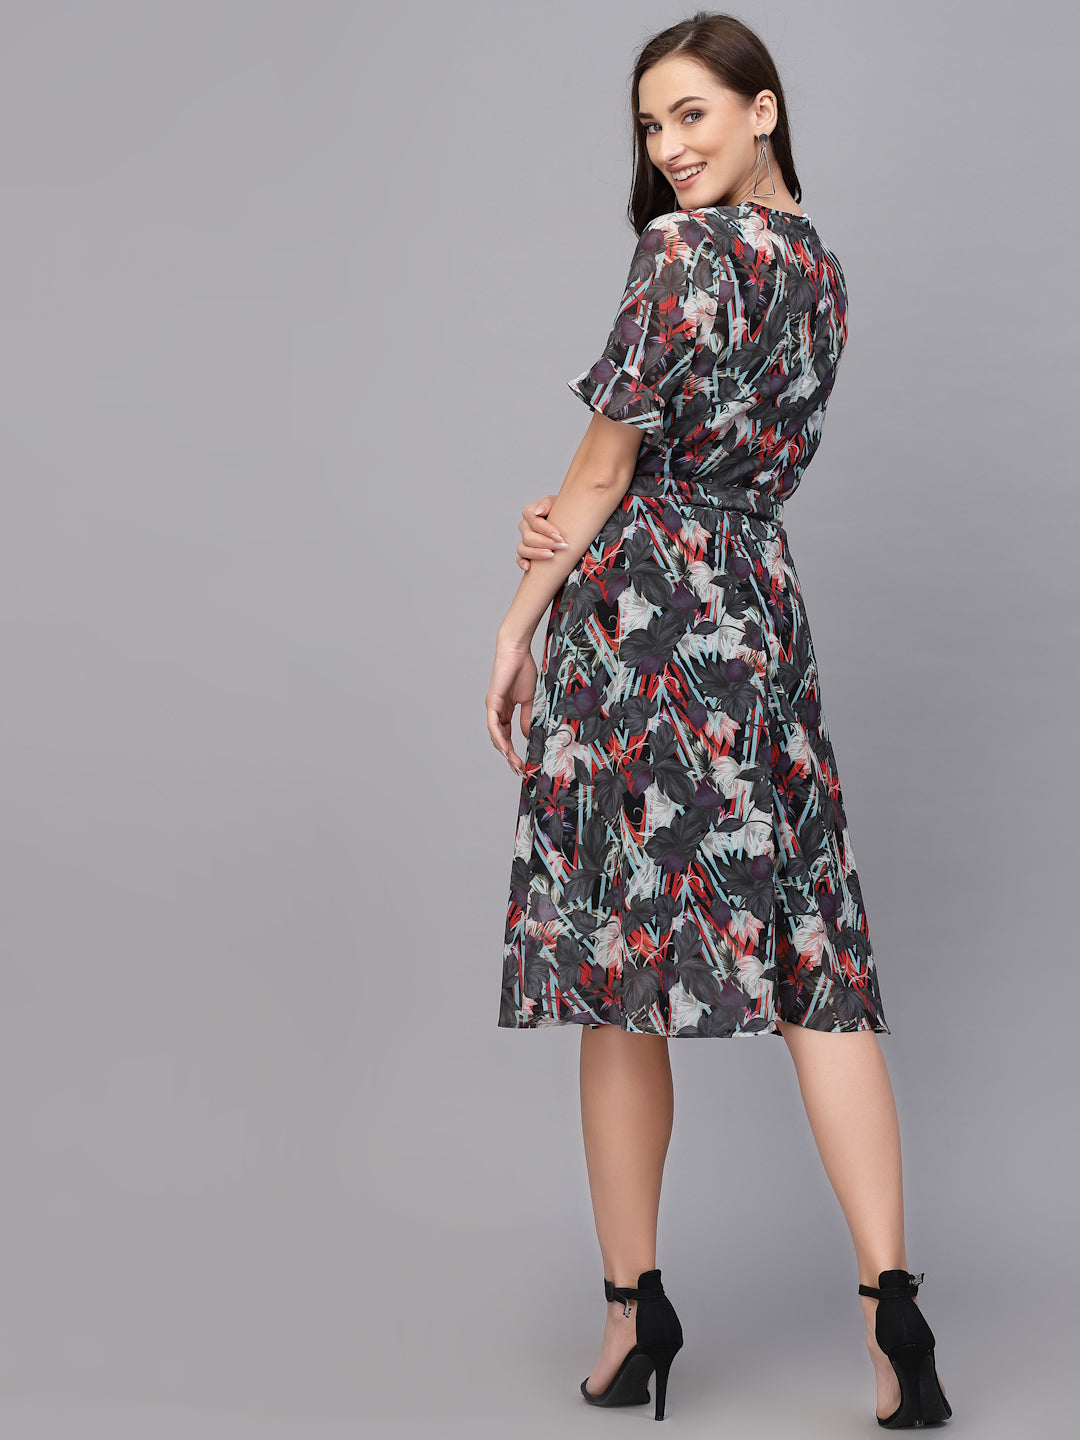 Valbone Women’s Grey Georgette Floral Printed Dress 3/4 Sleeves with Matching Balt